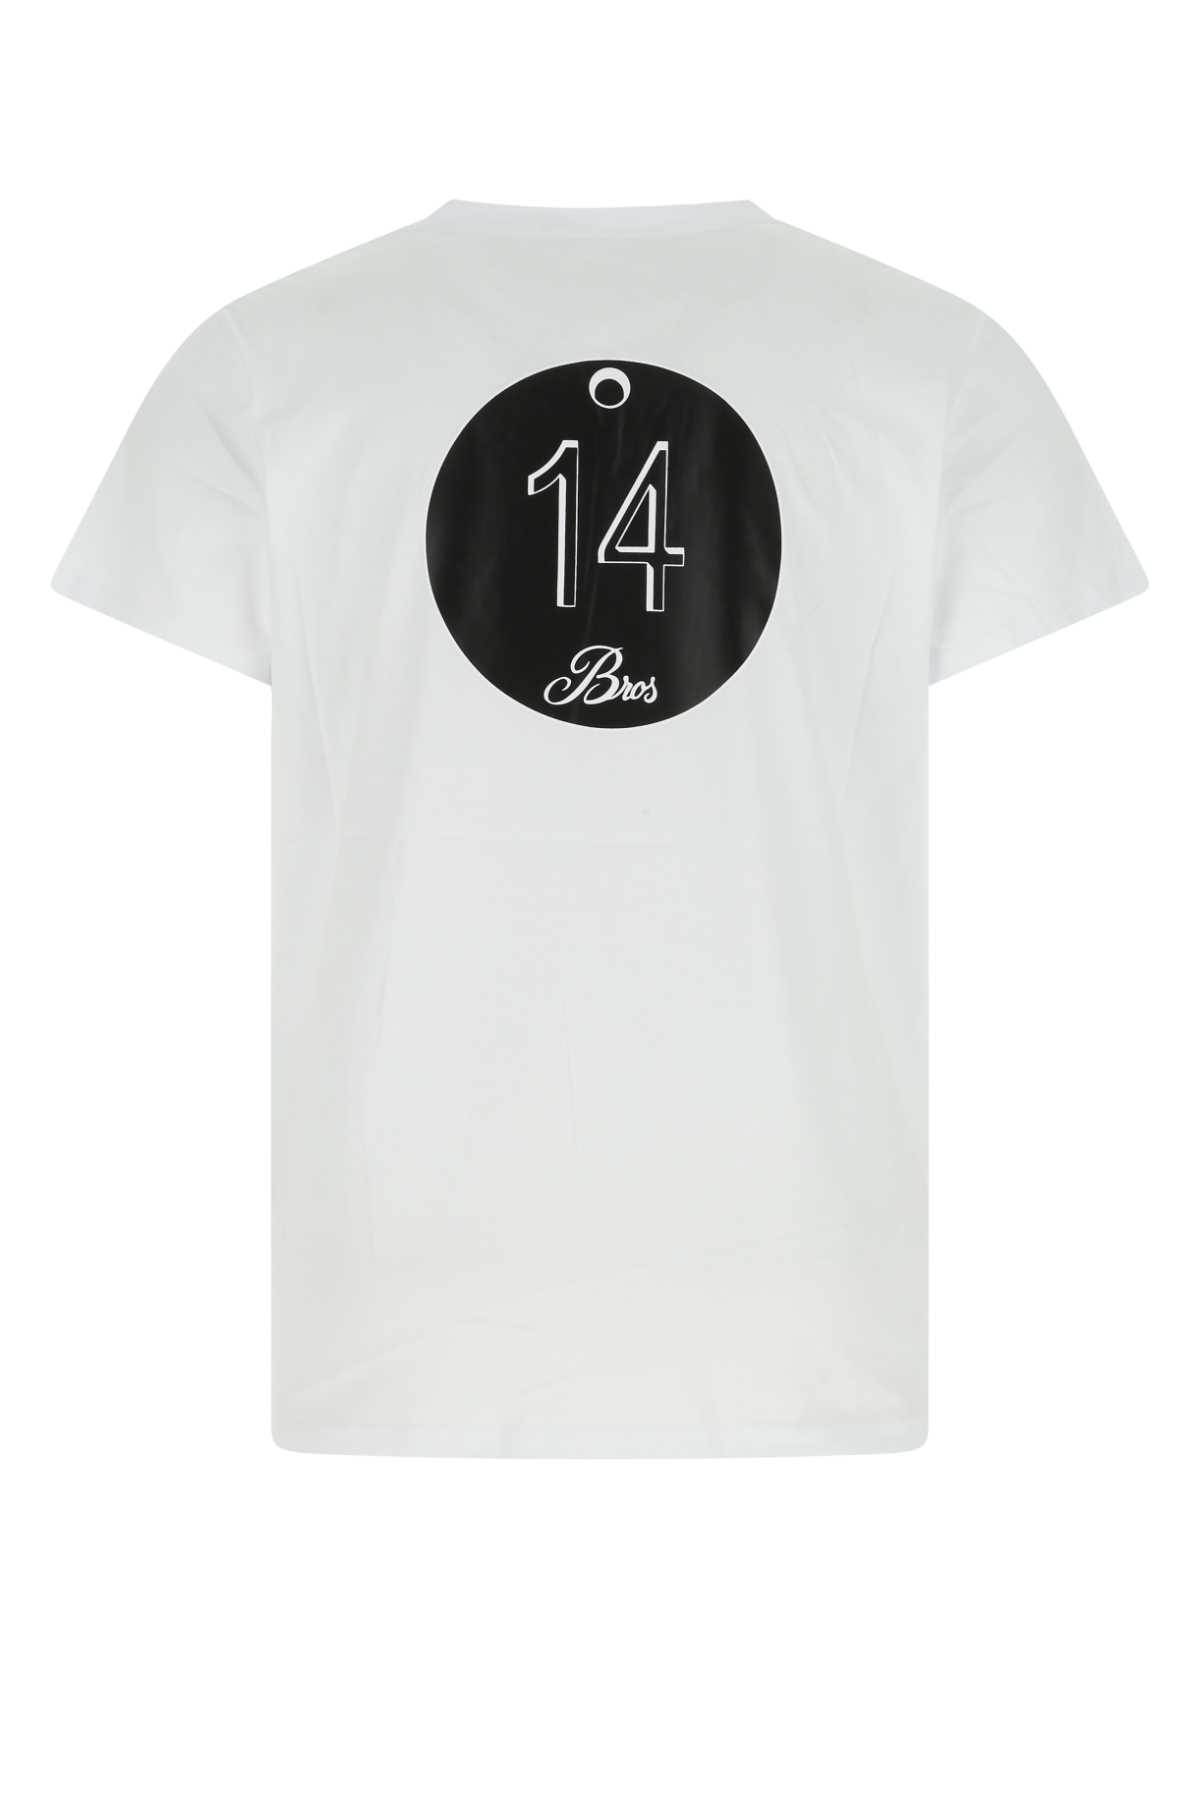 14 Bros White Cotton T-shirt In 001